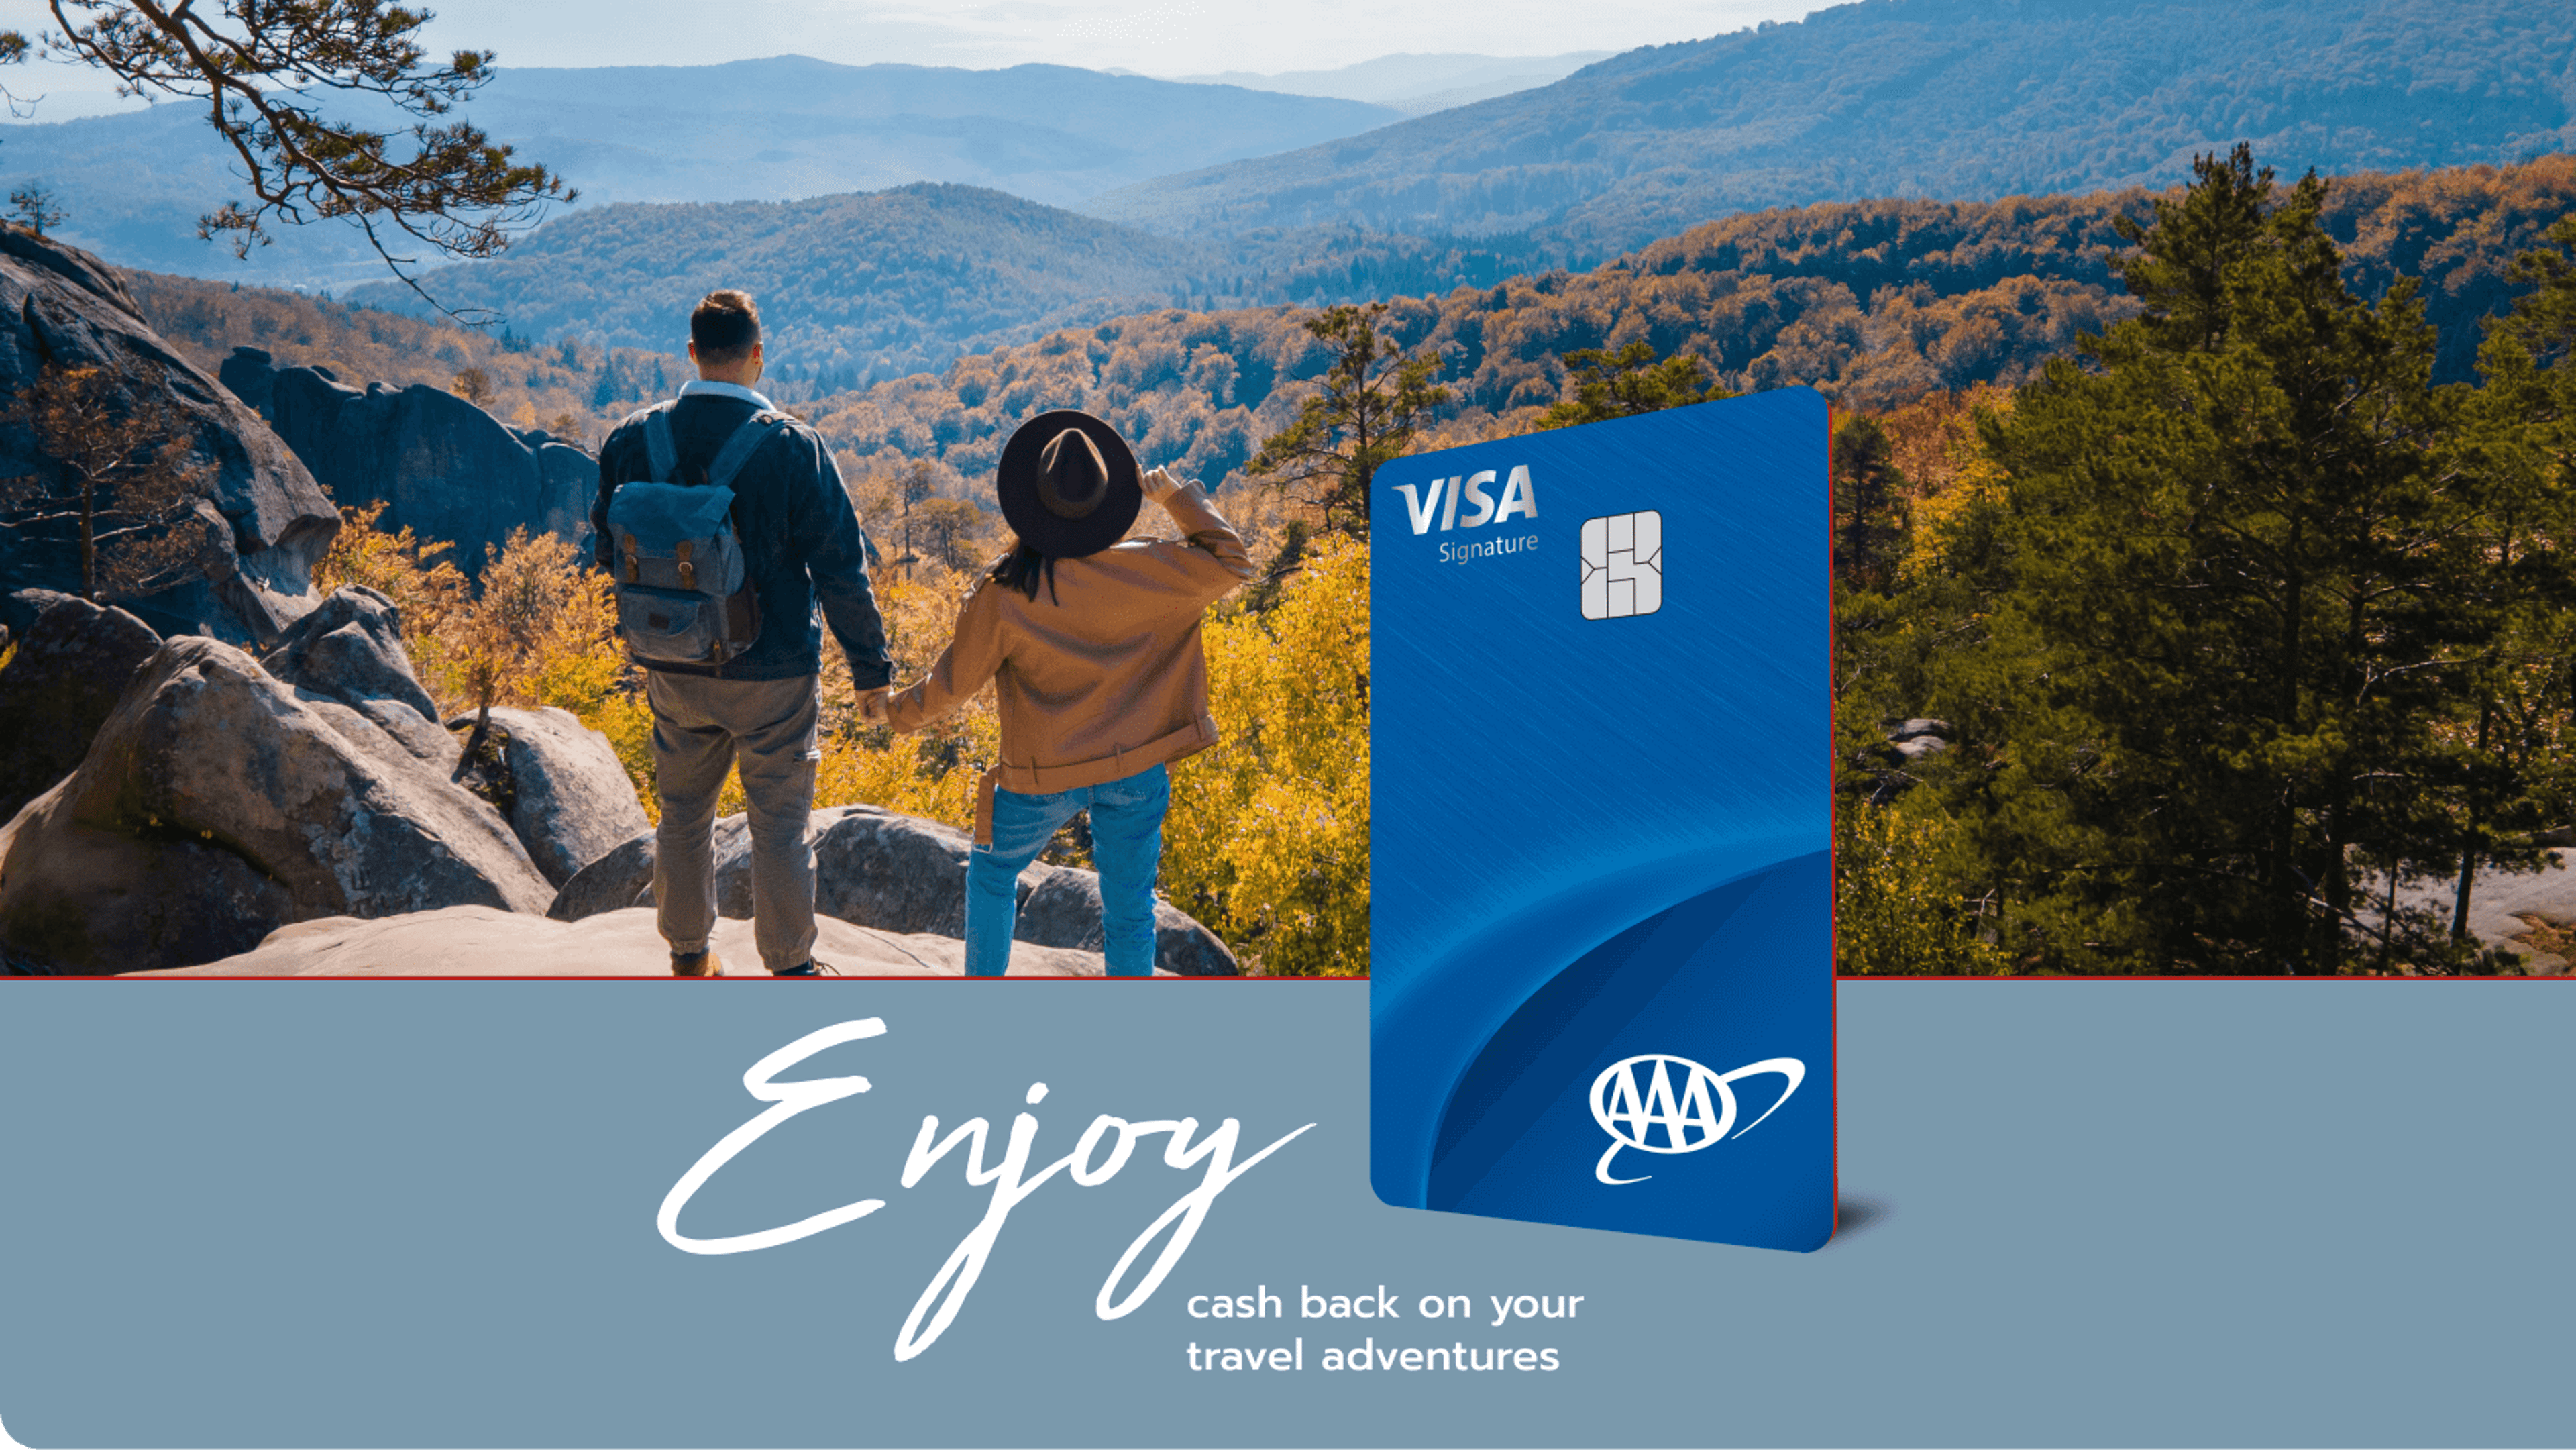 AAA Travel Advantage Visa Signature Credit Card